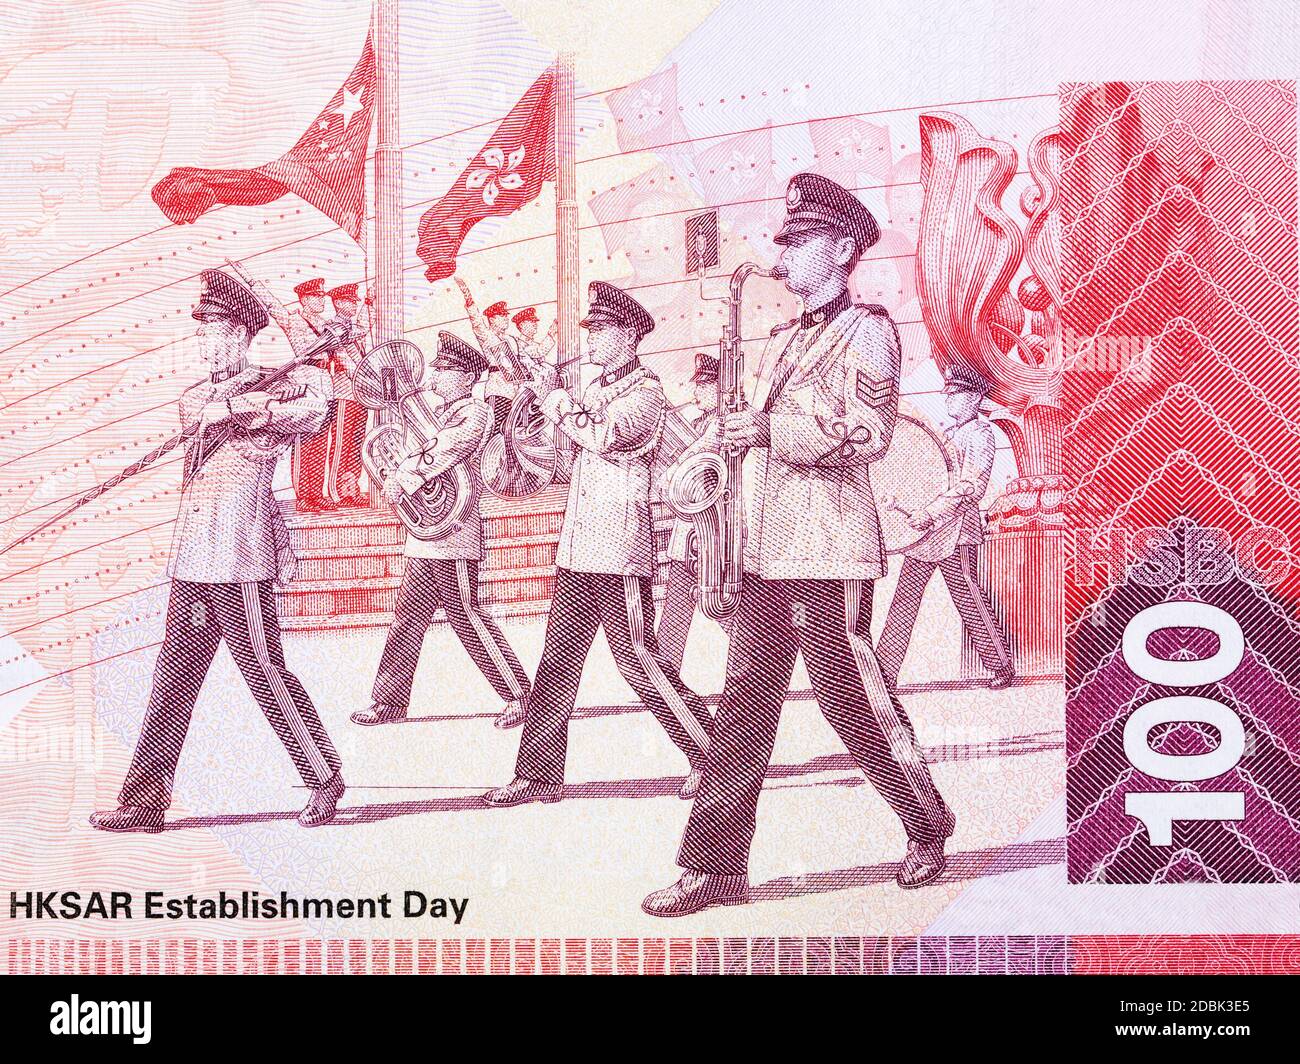 HKSAR Establishment Day from Hong Kong money Stock Photo